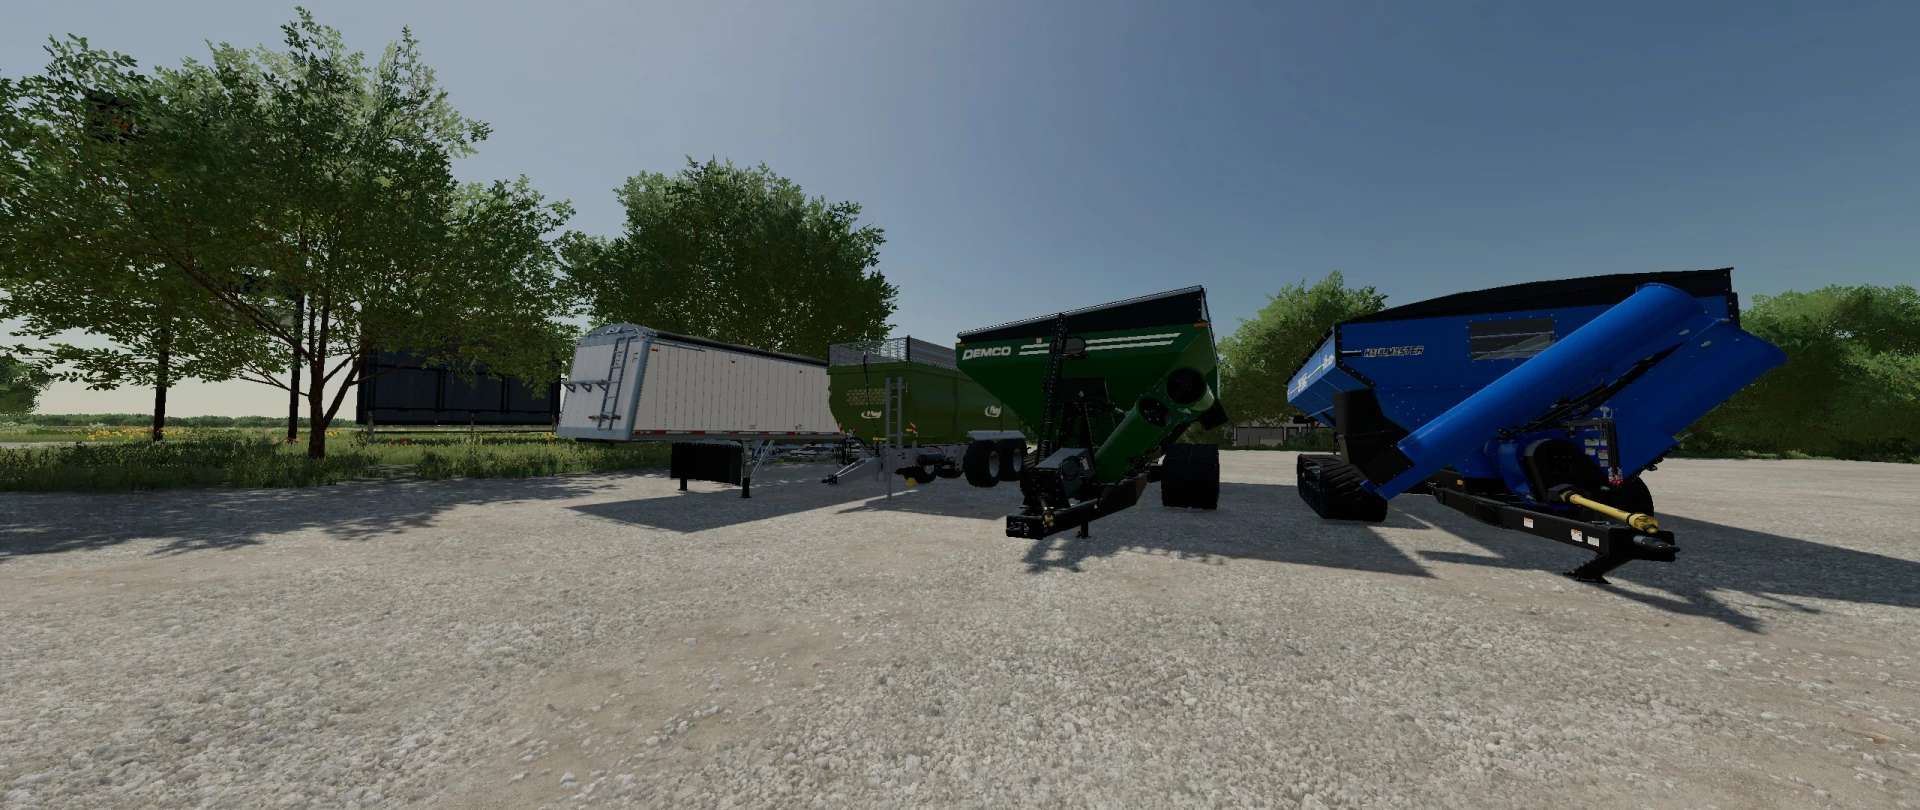 Ls22 All In One Trailer Super Pack V1000 Farming Simulator 22 Mod Ls22 Mod Download 6379